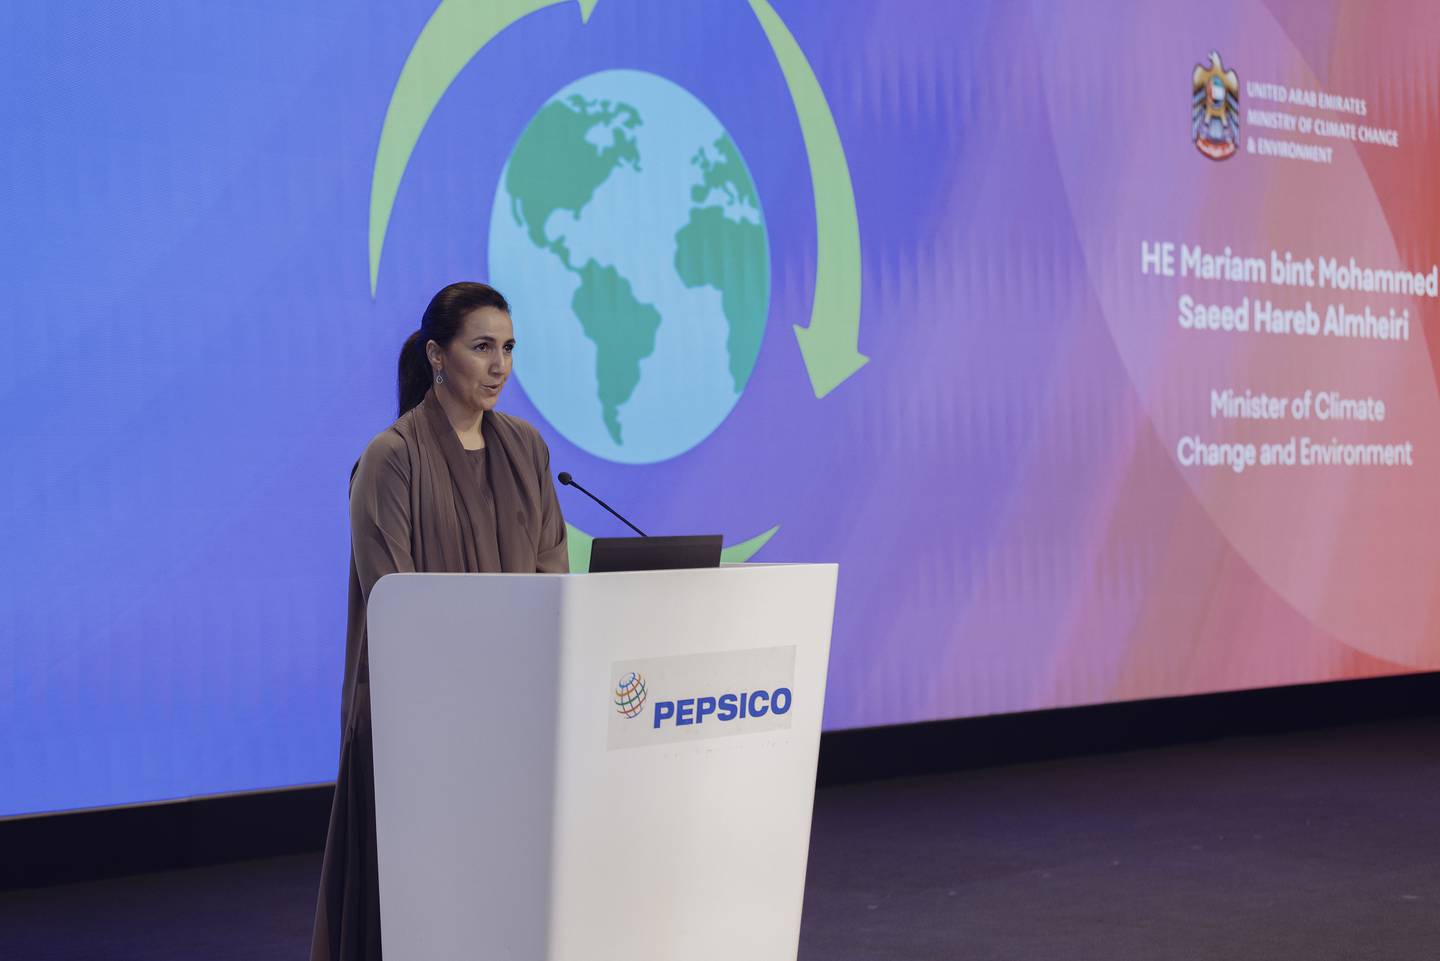 Mariam Al Mheiri, Minister of Climate Change and Environment. Photo: PepsiCo